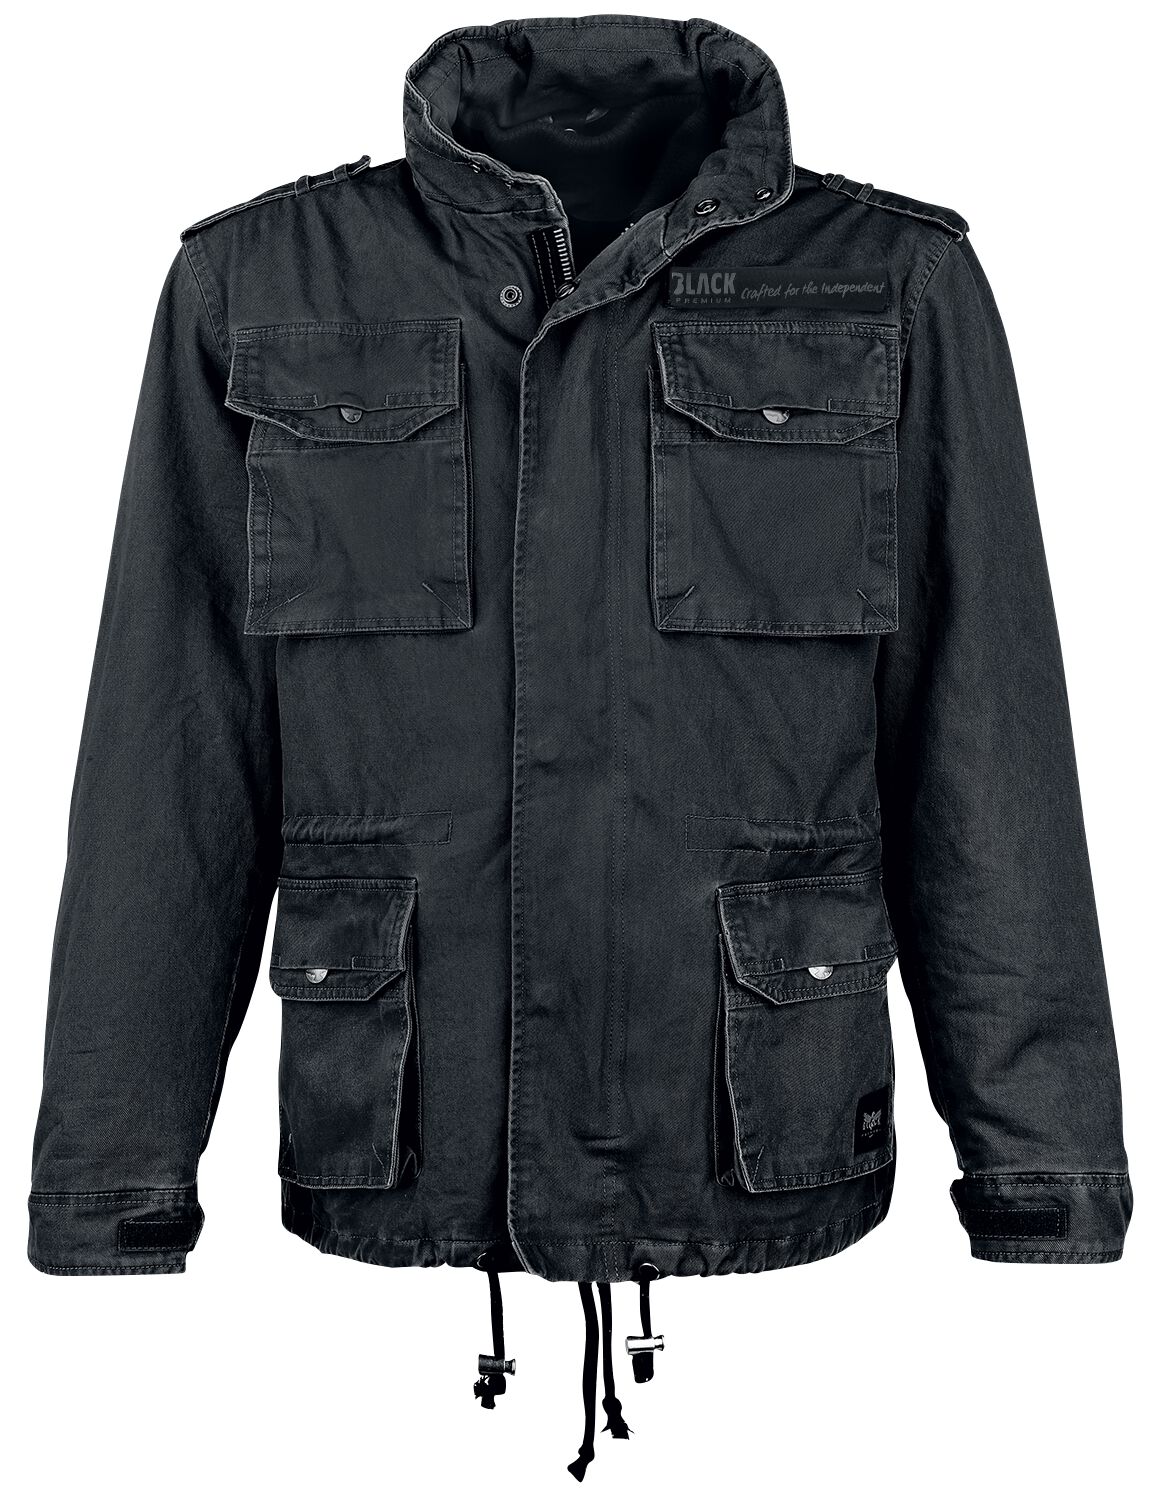 Black Premium by EMP Army Field Jacket Winterjacke schwarz in 6XL von Black Premium by EMP